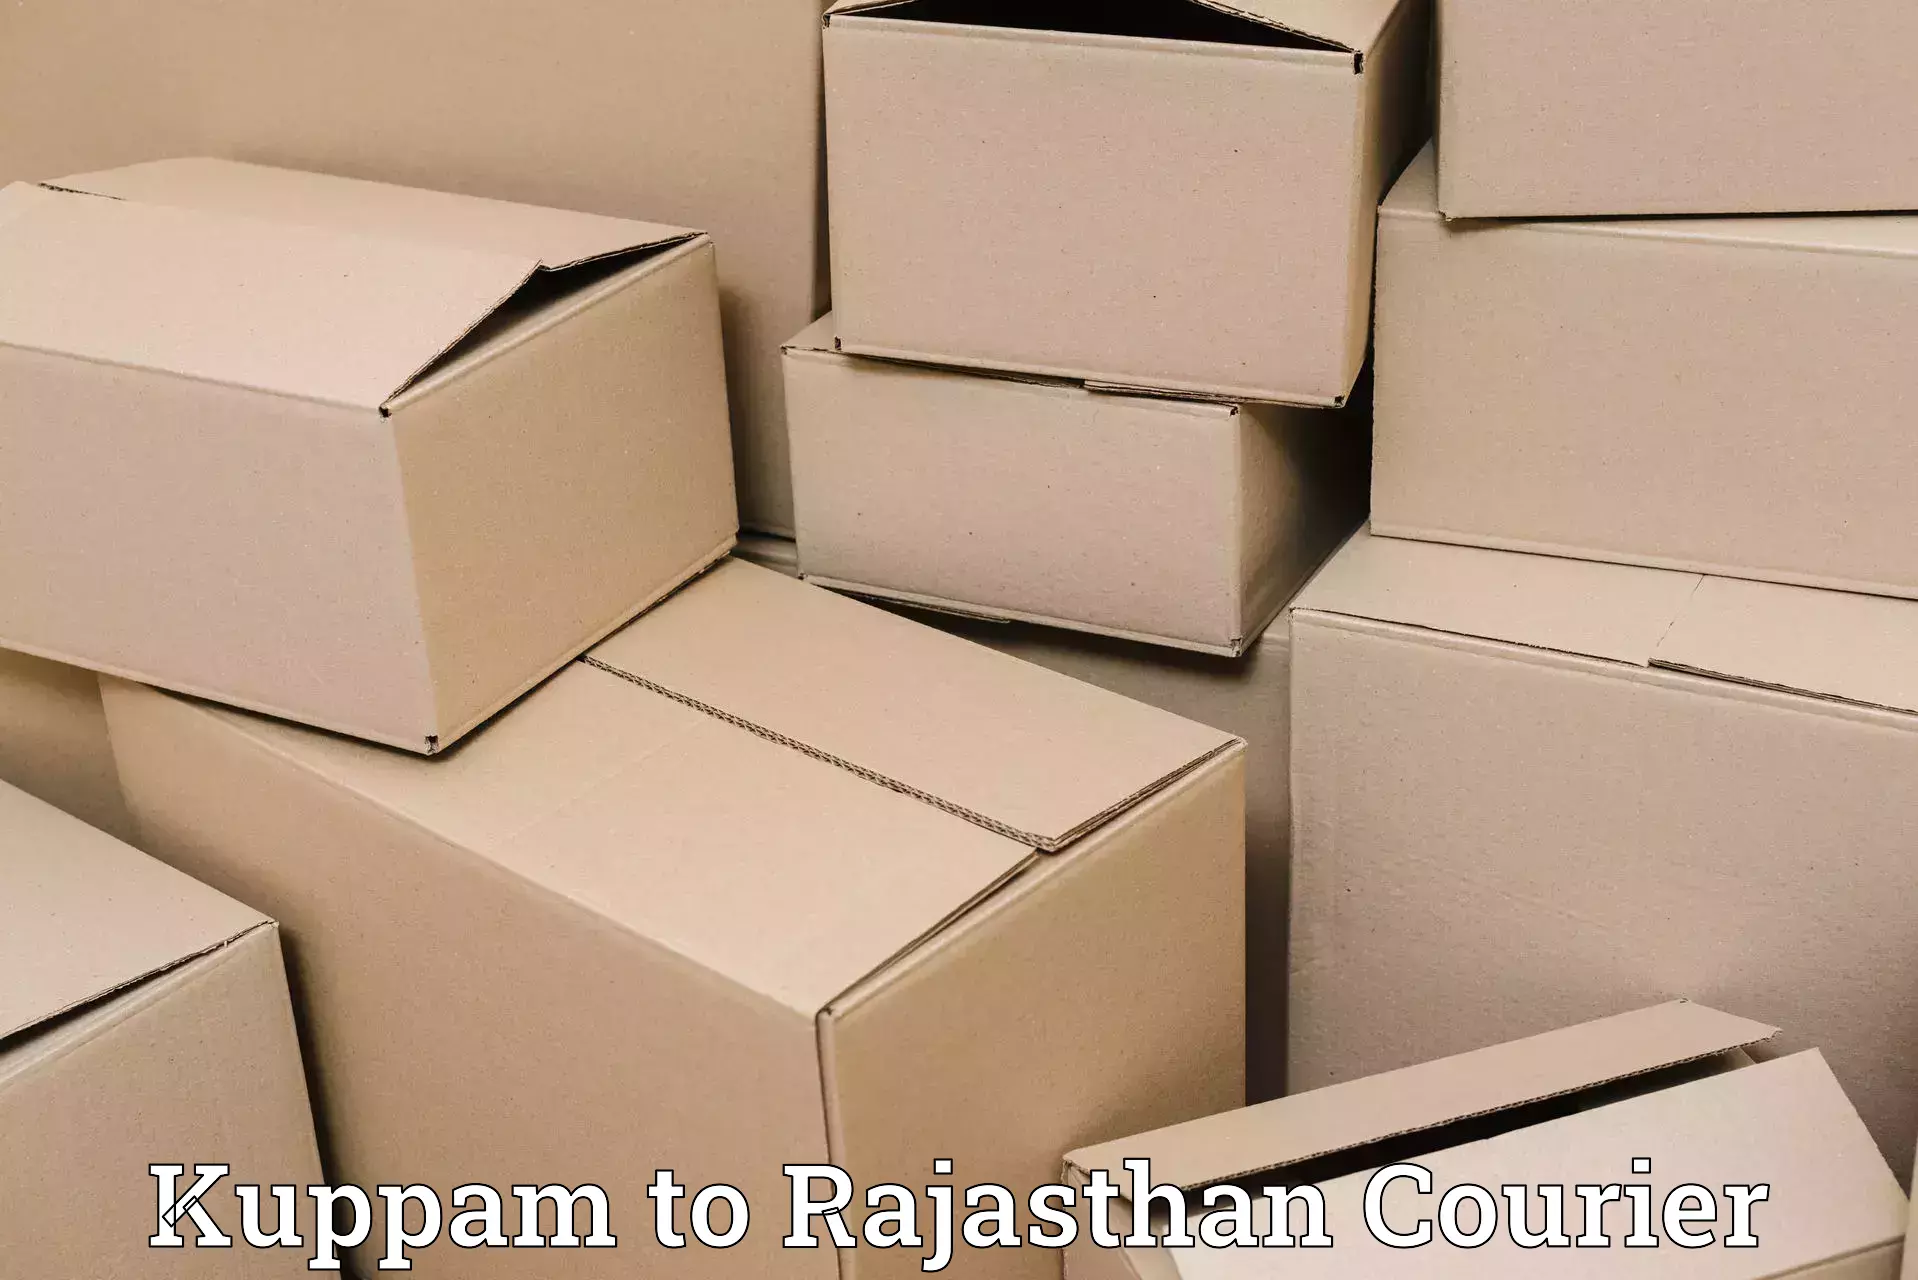 Logistics service provider Kuppam to Udaipur